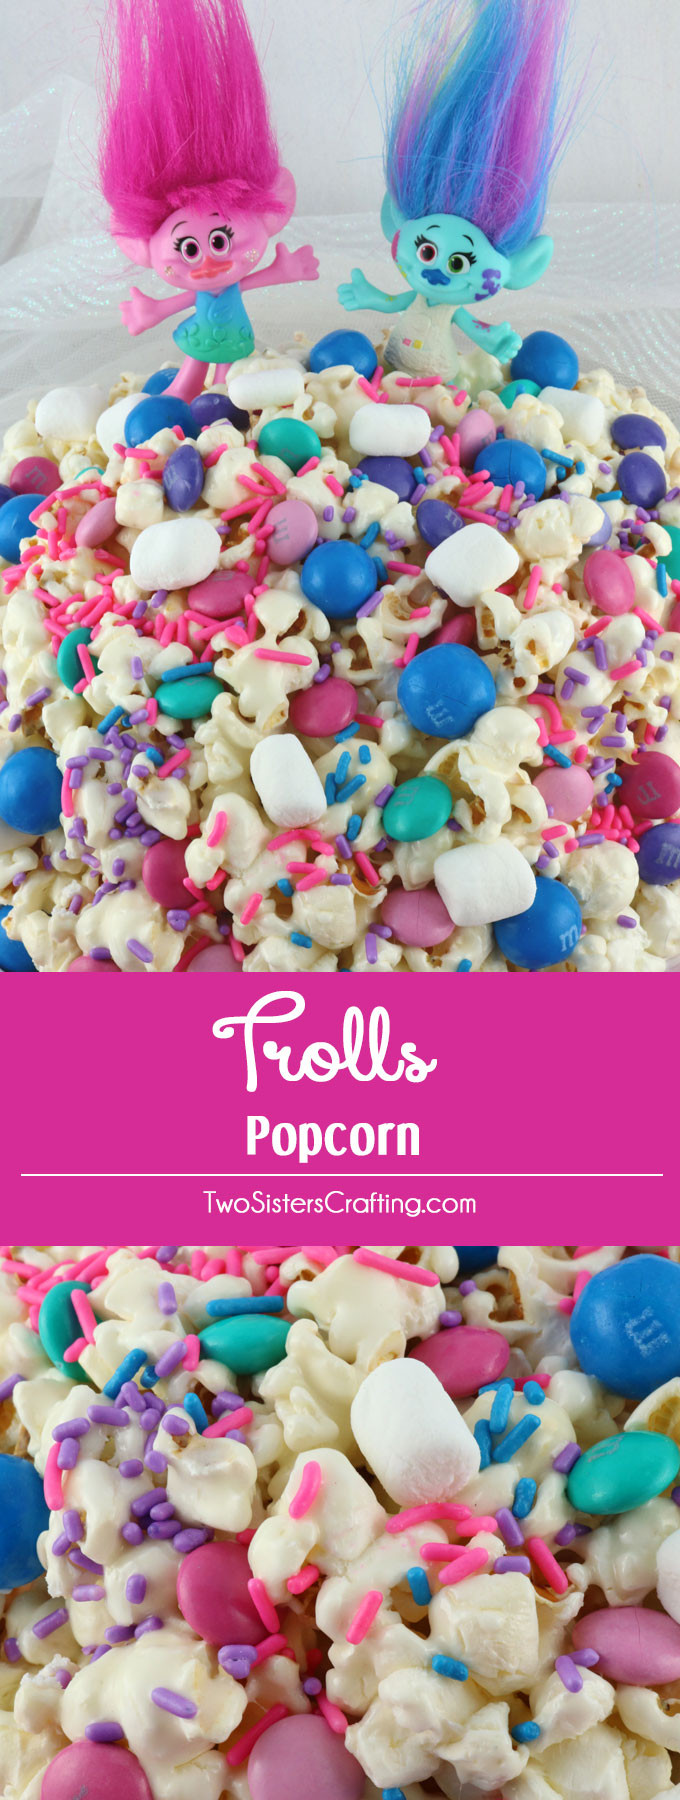 Fun Troll Movie Party Food Ideas
 Trolls Popcorn Two Sisters